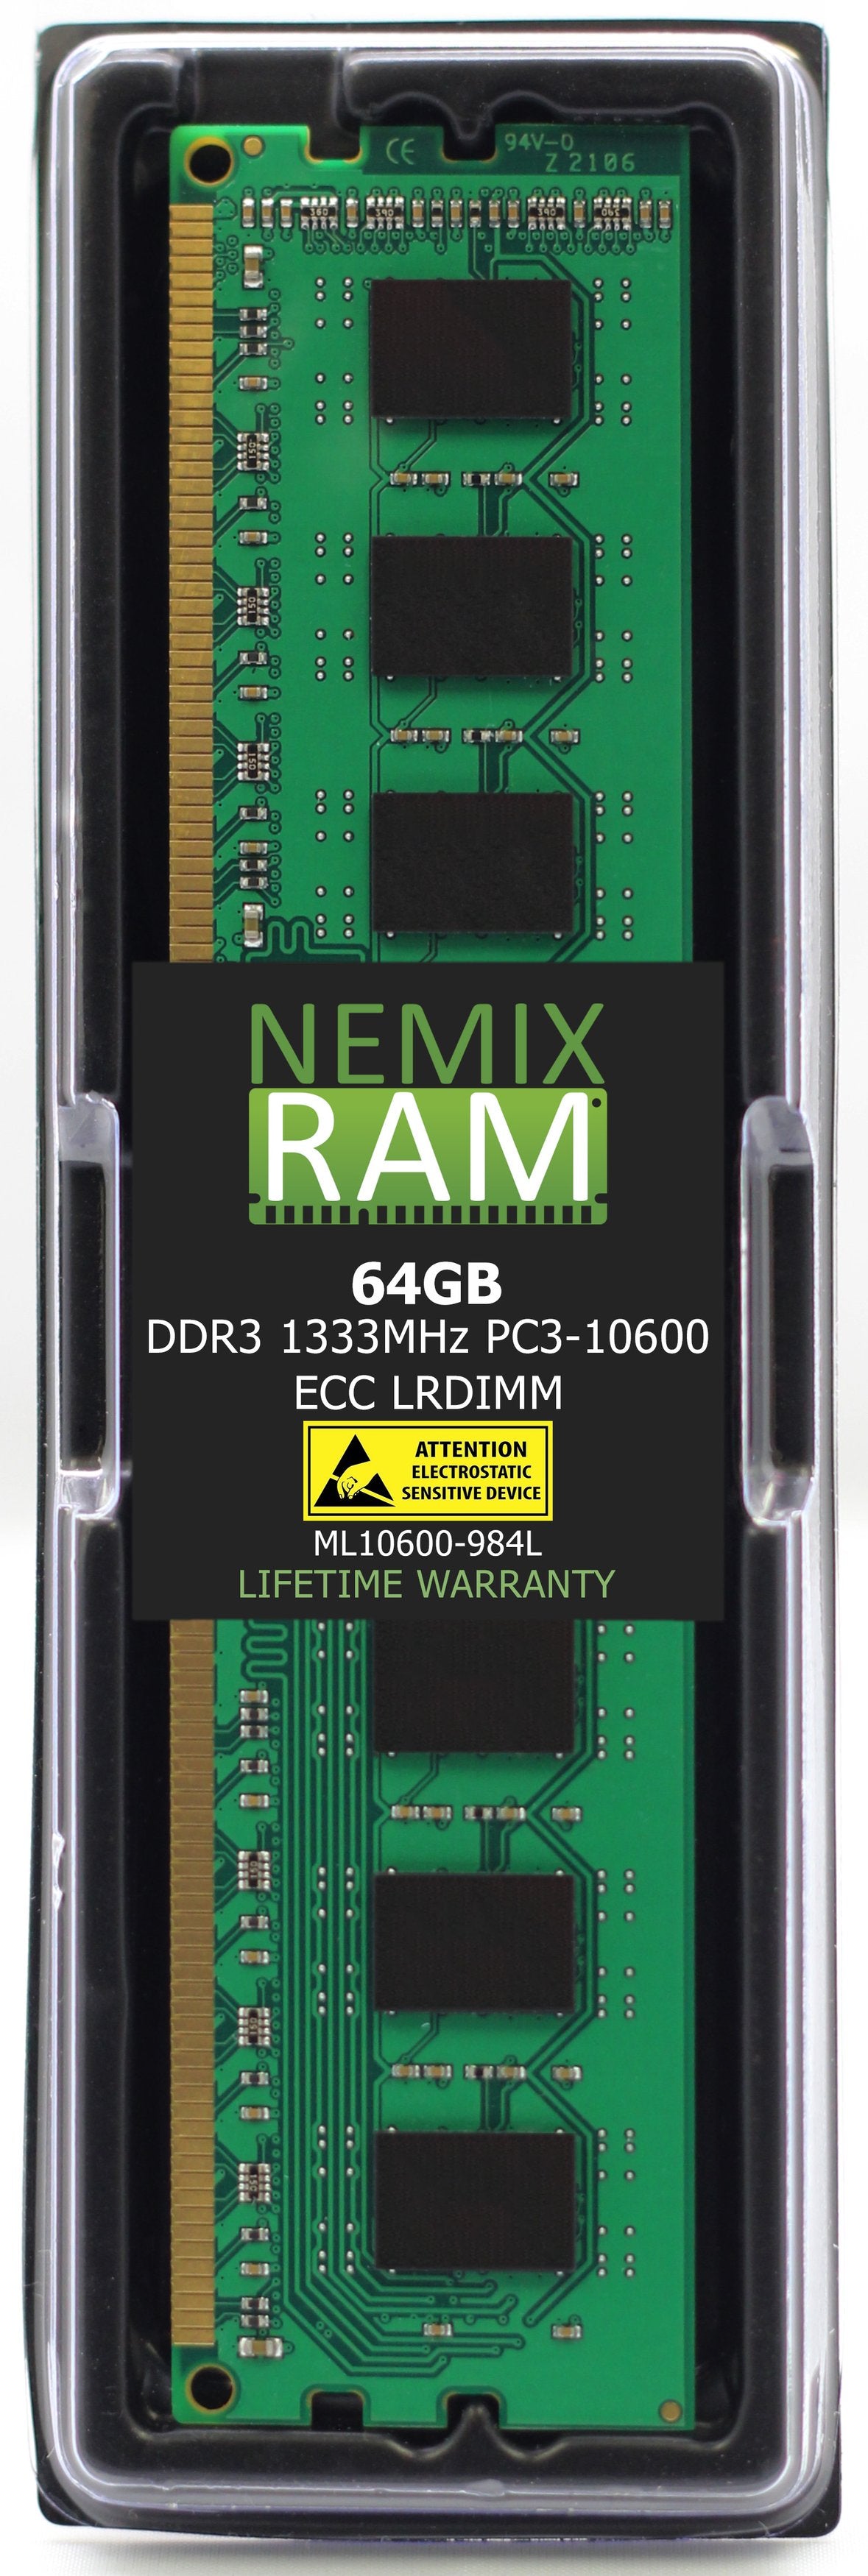 Hynix HMTA8GL7AHR4A-H9 64GB DDR3 1333MHZ PC3-10600 LRDIMM Compatible Memory Module